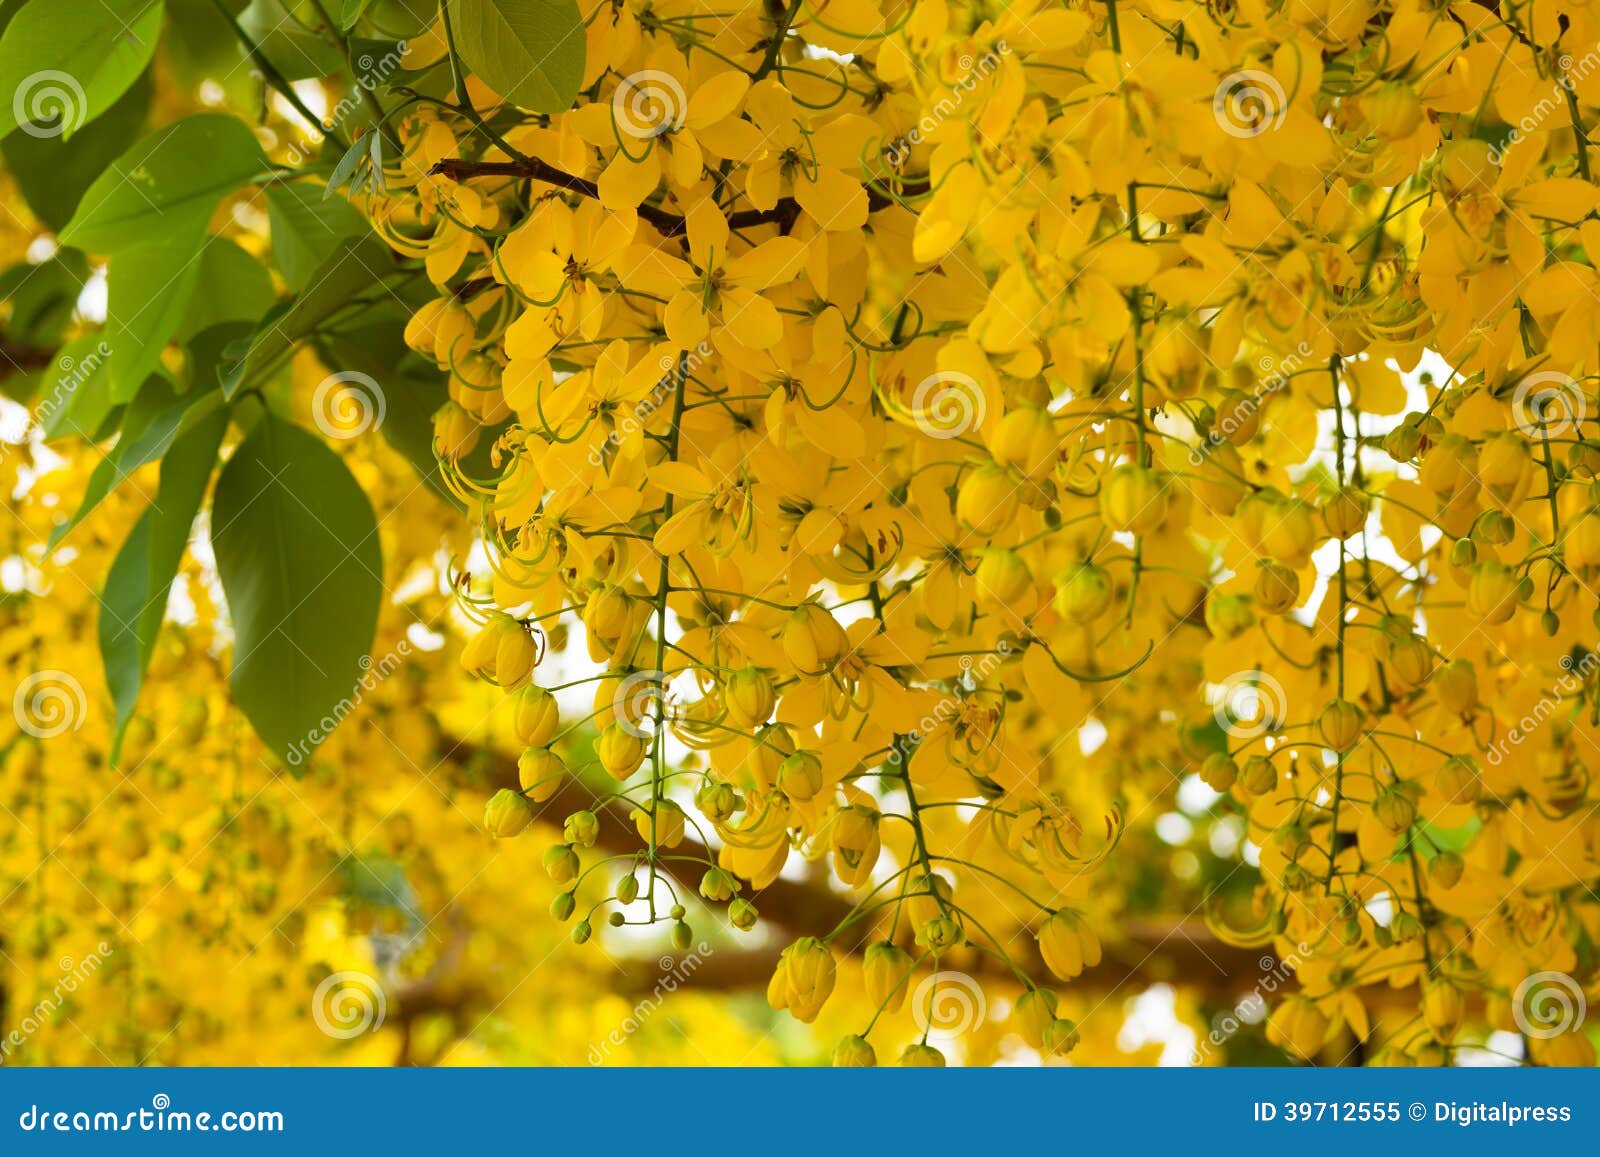 Golden Shower Tree in Bloom Stock Image - Image of tree, flora: 39712555